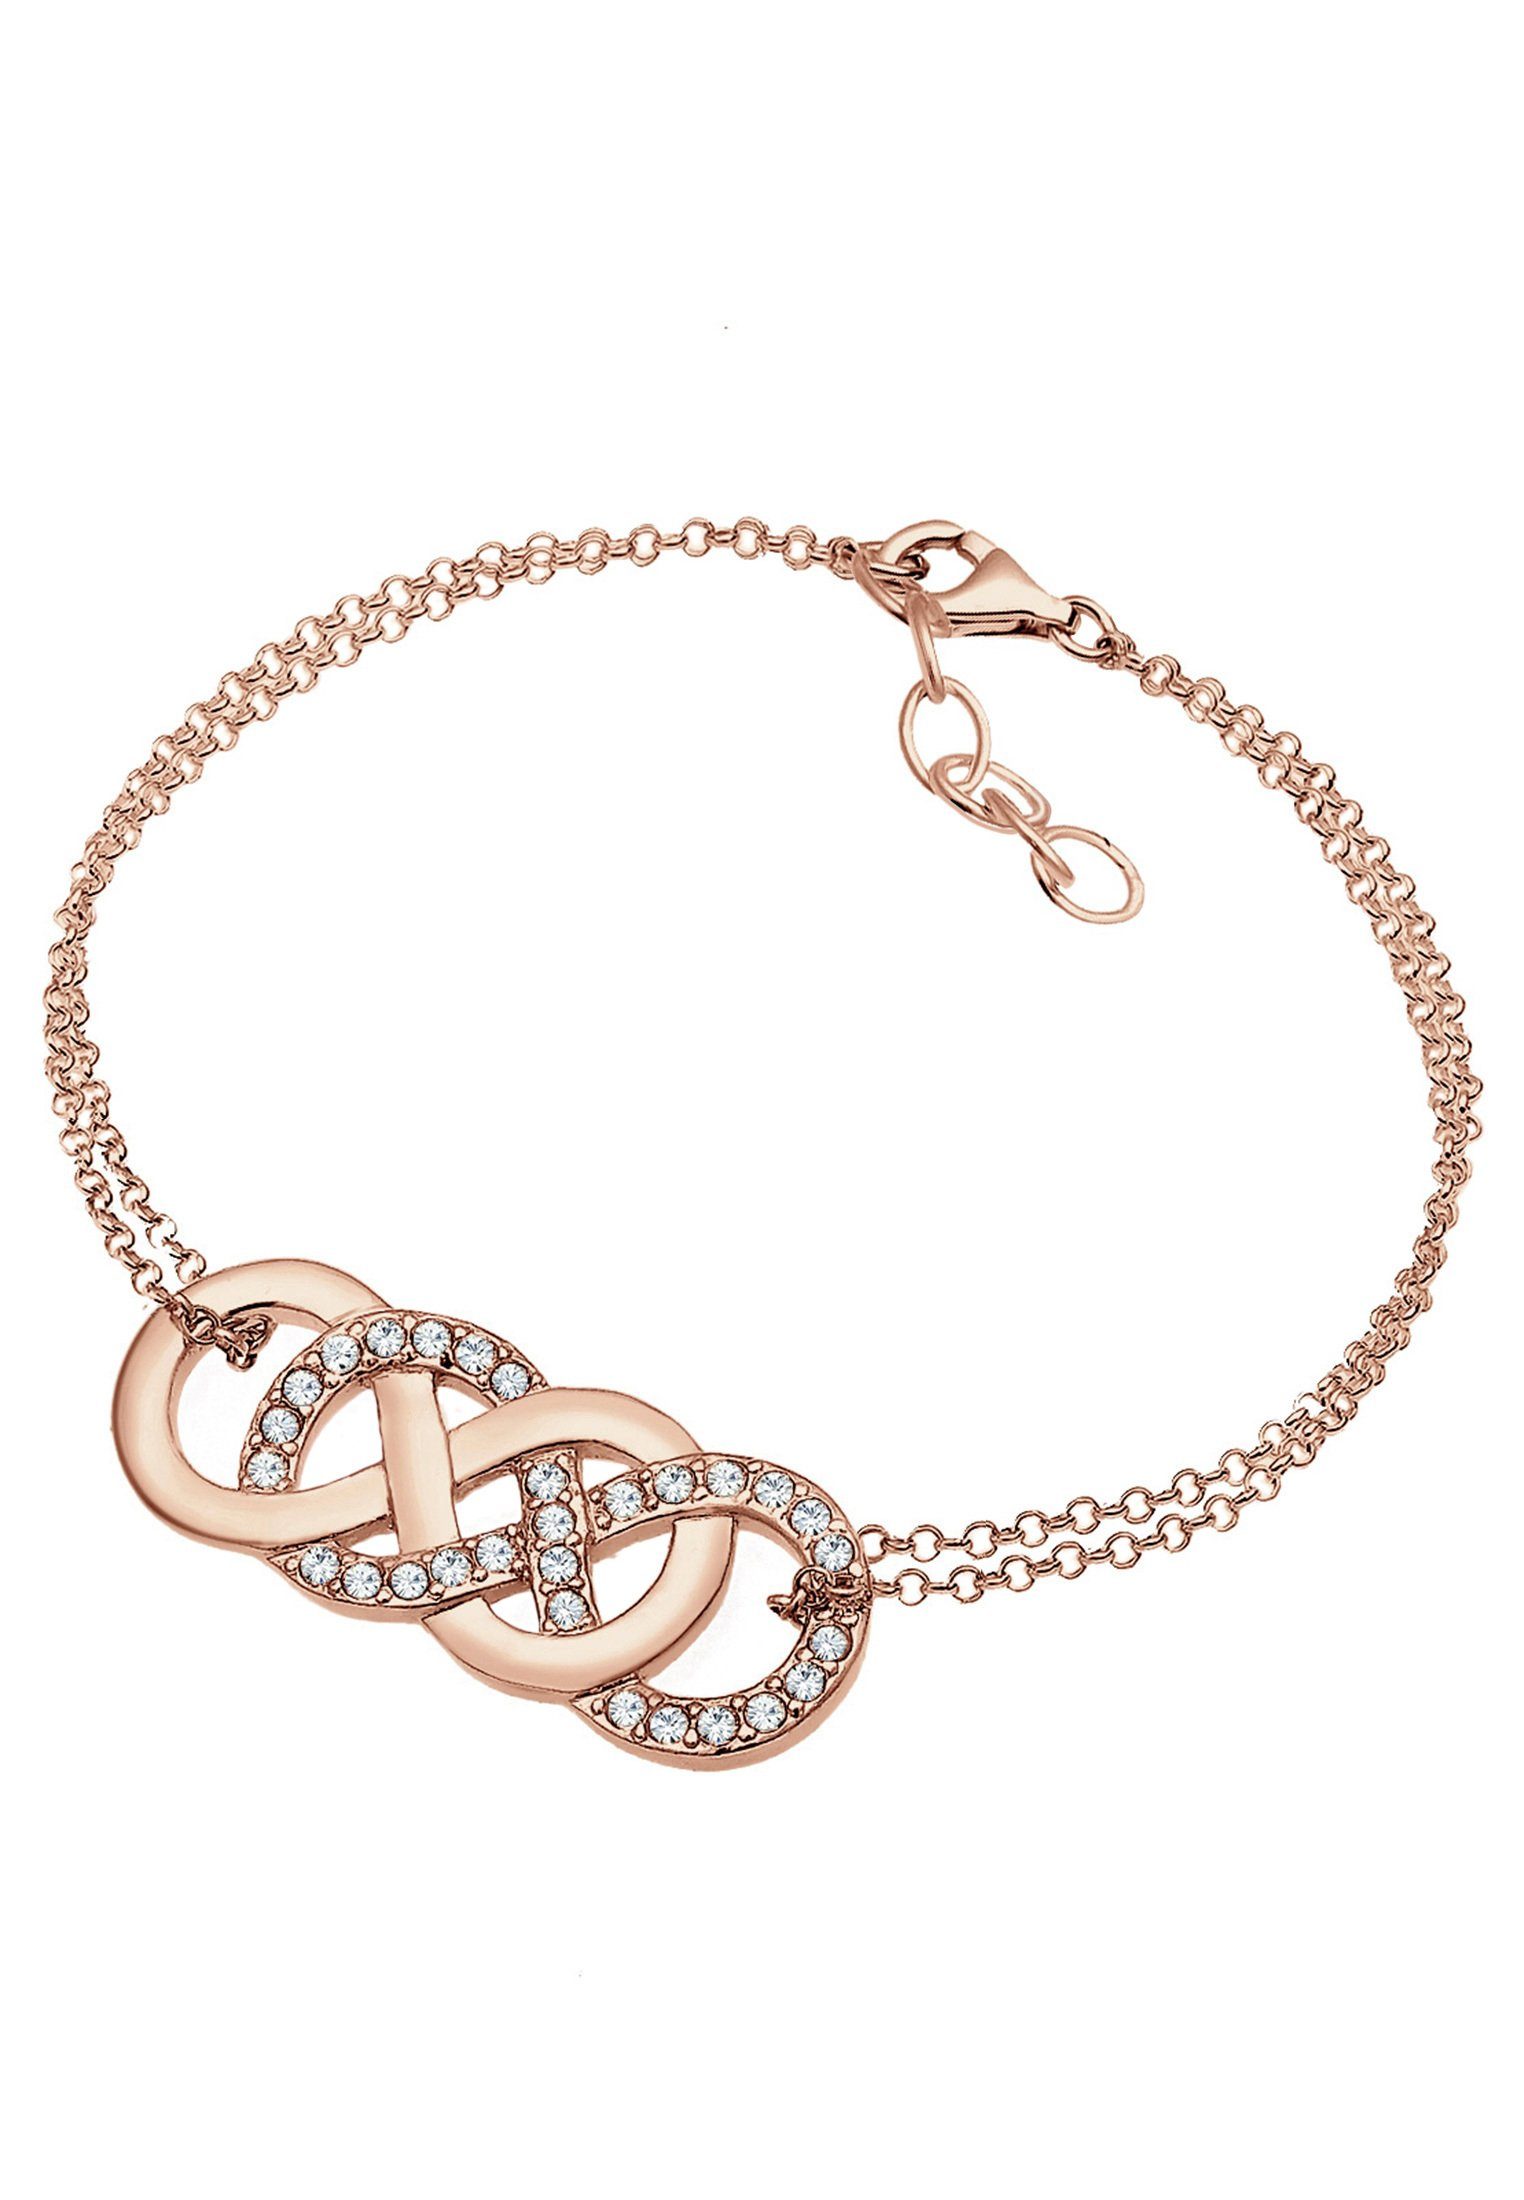 Elli Armband Infinity Kristalle Schmuckstück 925 anlaufgeschützt Liebe Silber, hochglanzpoliert und